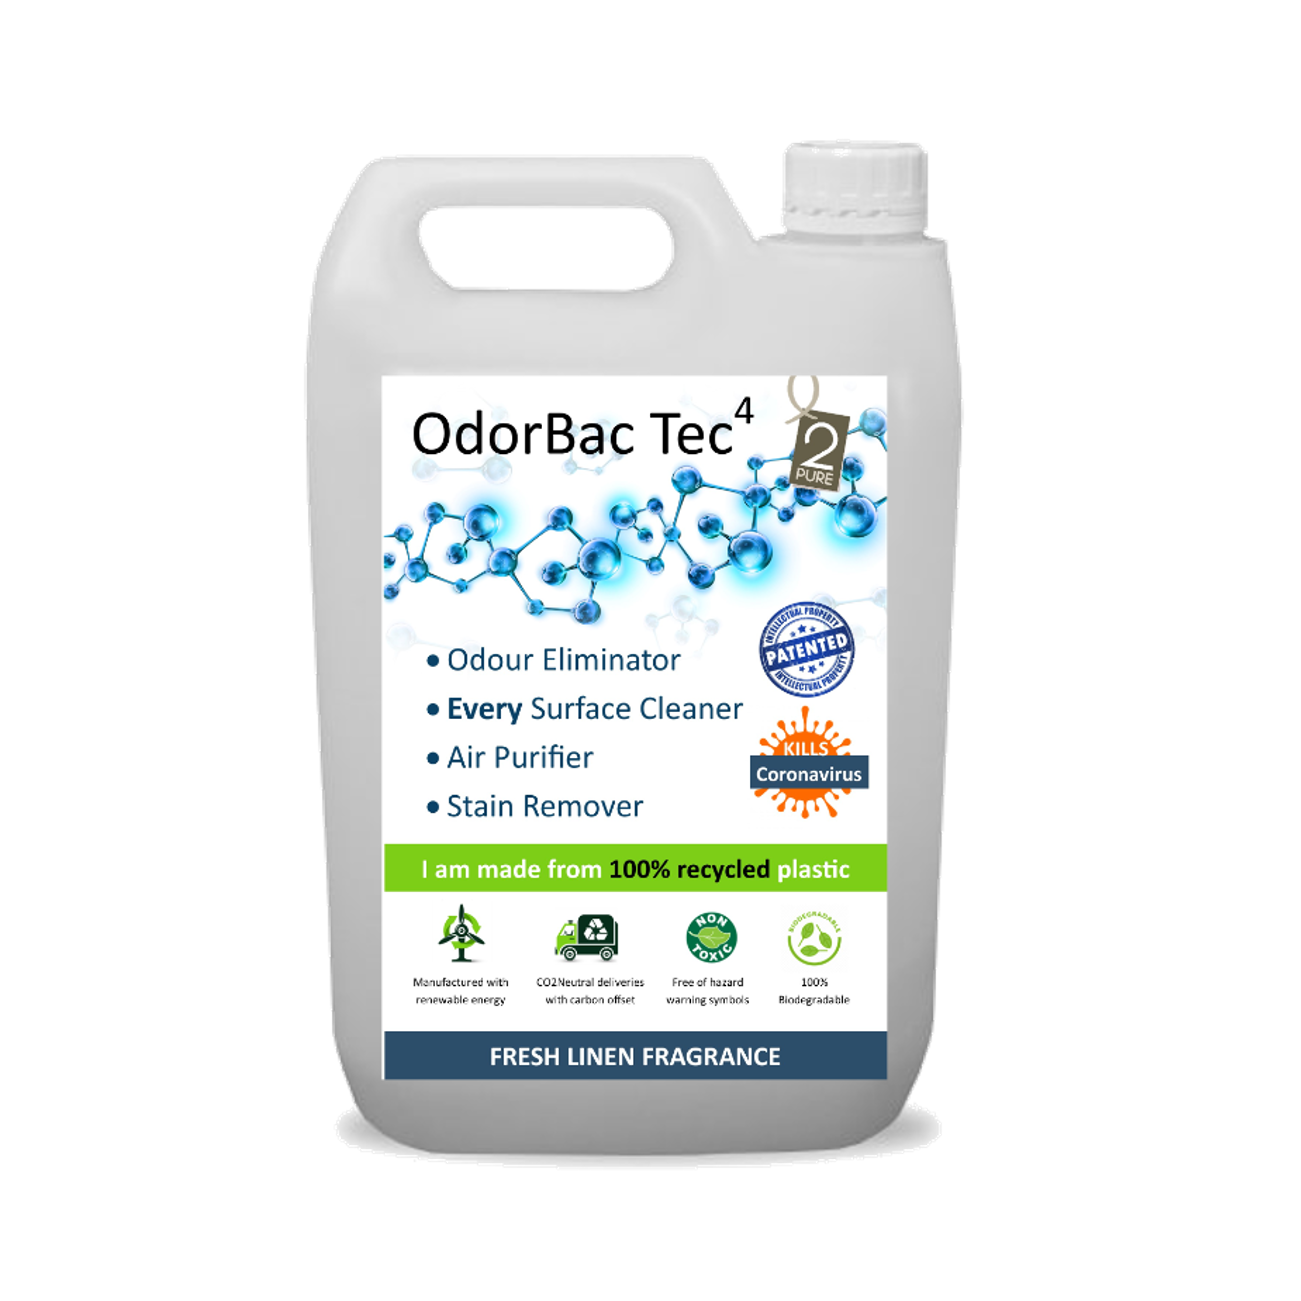 OdorBac Tec4 5 Litre Concentrate